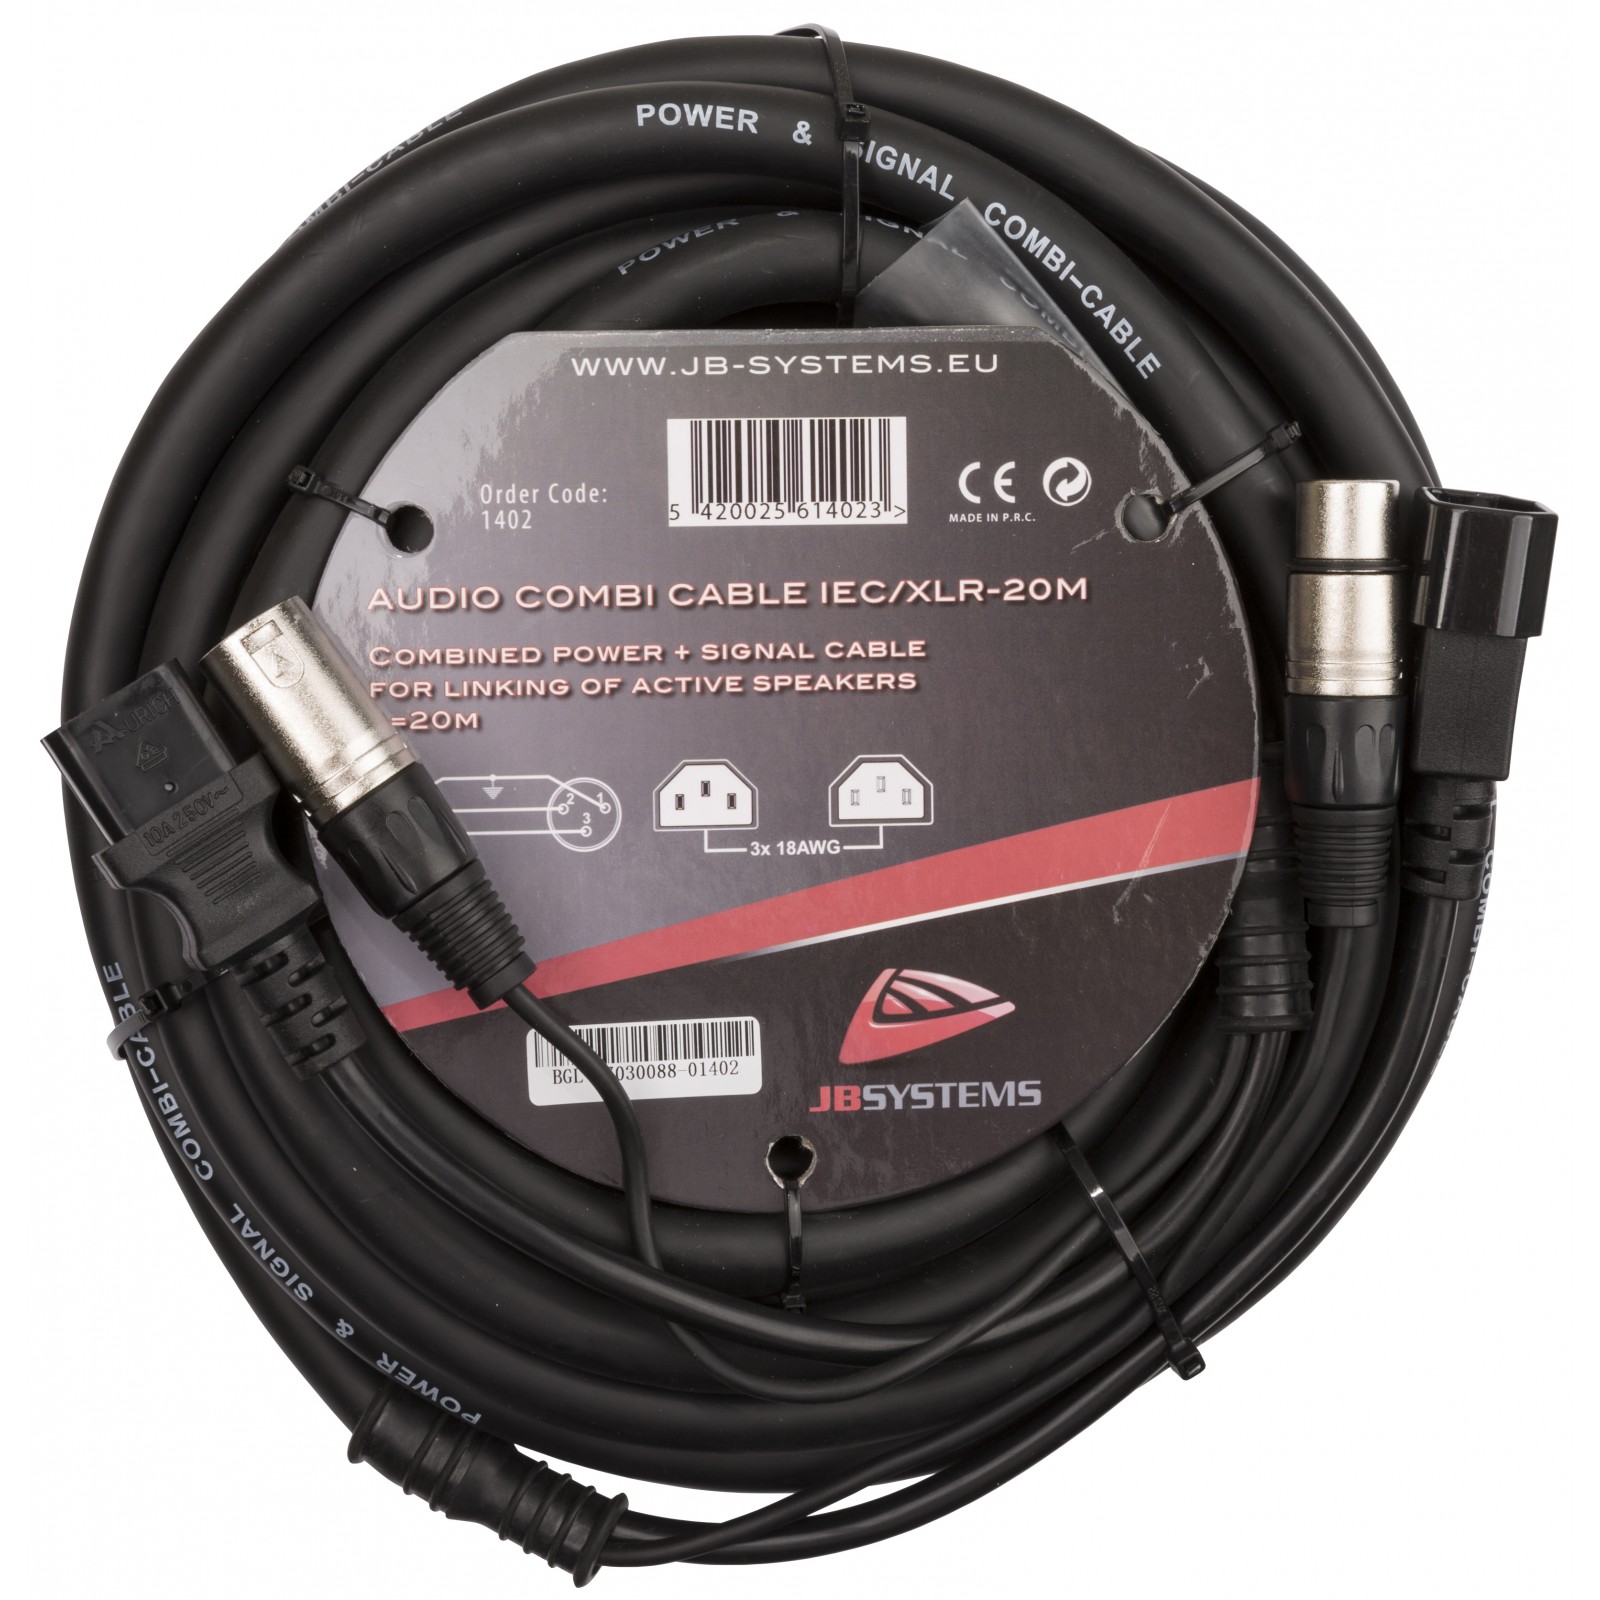 JB Systems Audio Combi Cable IEC/XLR-20M Audio/Strom Hybrid Kabel